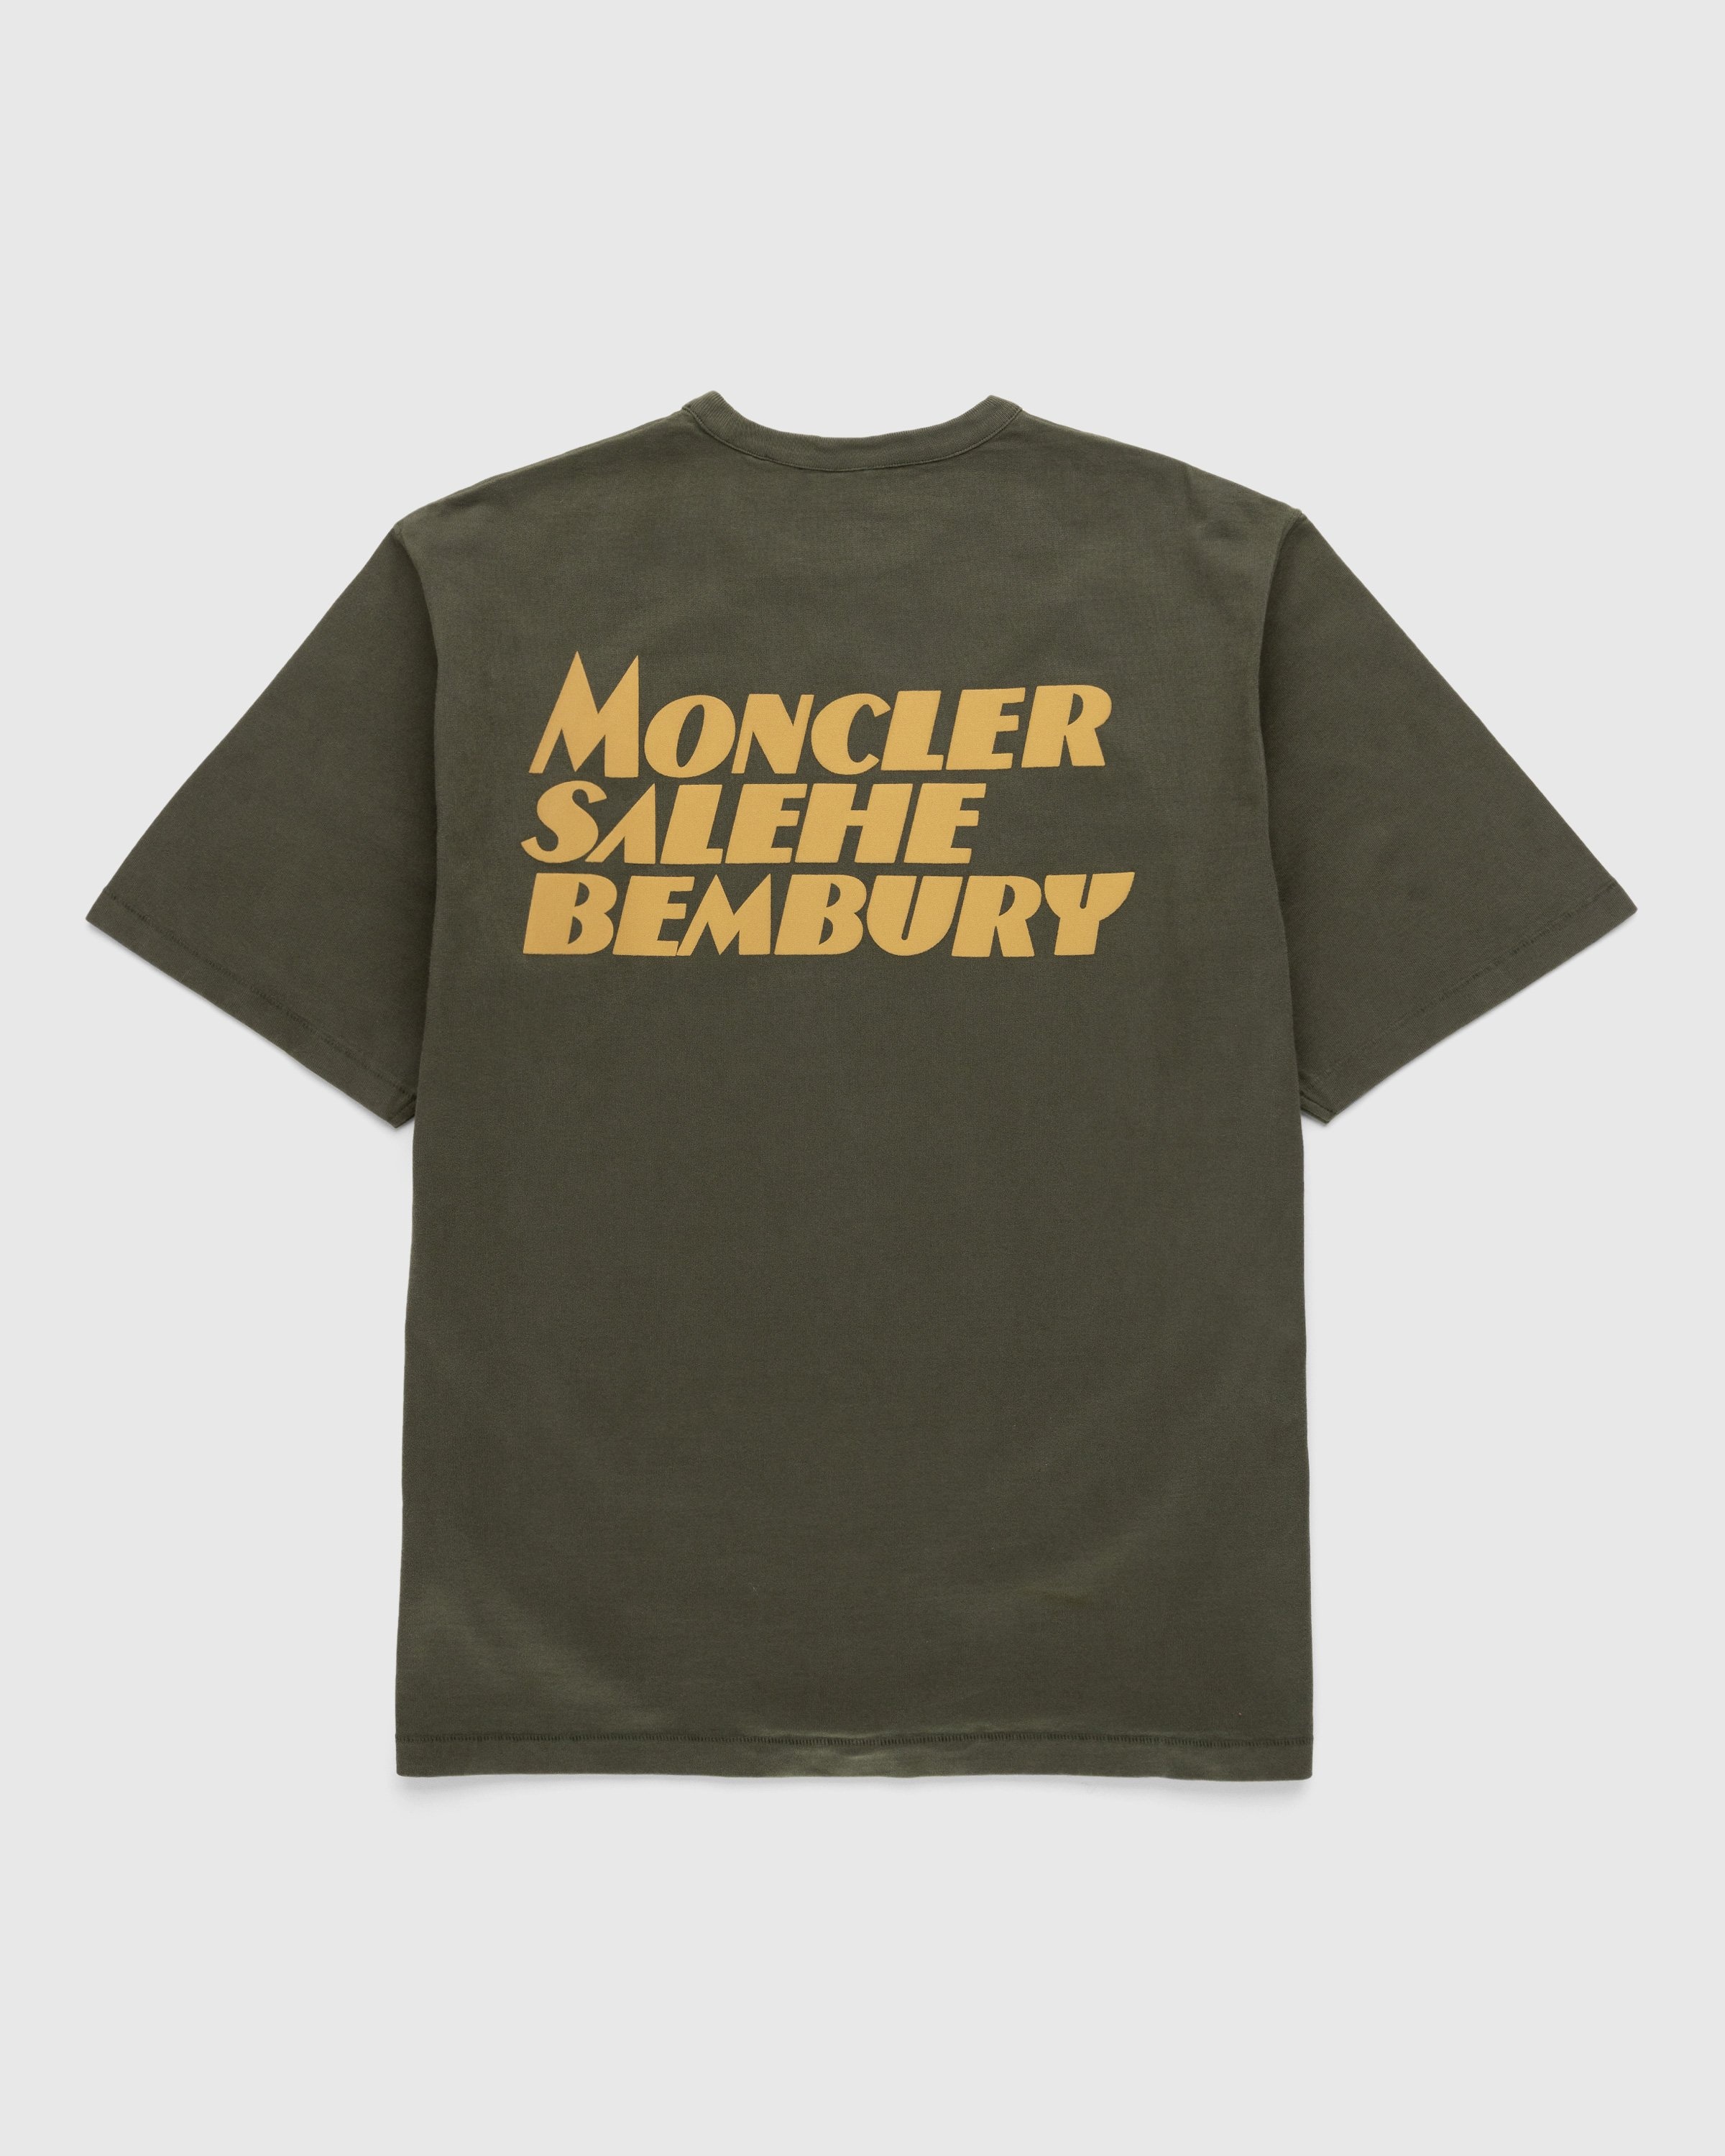 Moncler x Salehe Bembury – Logo T-Shirt Green | Highsnobiety Shop